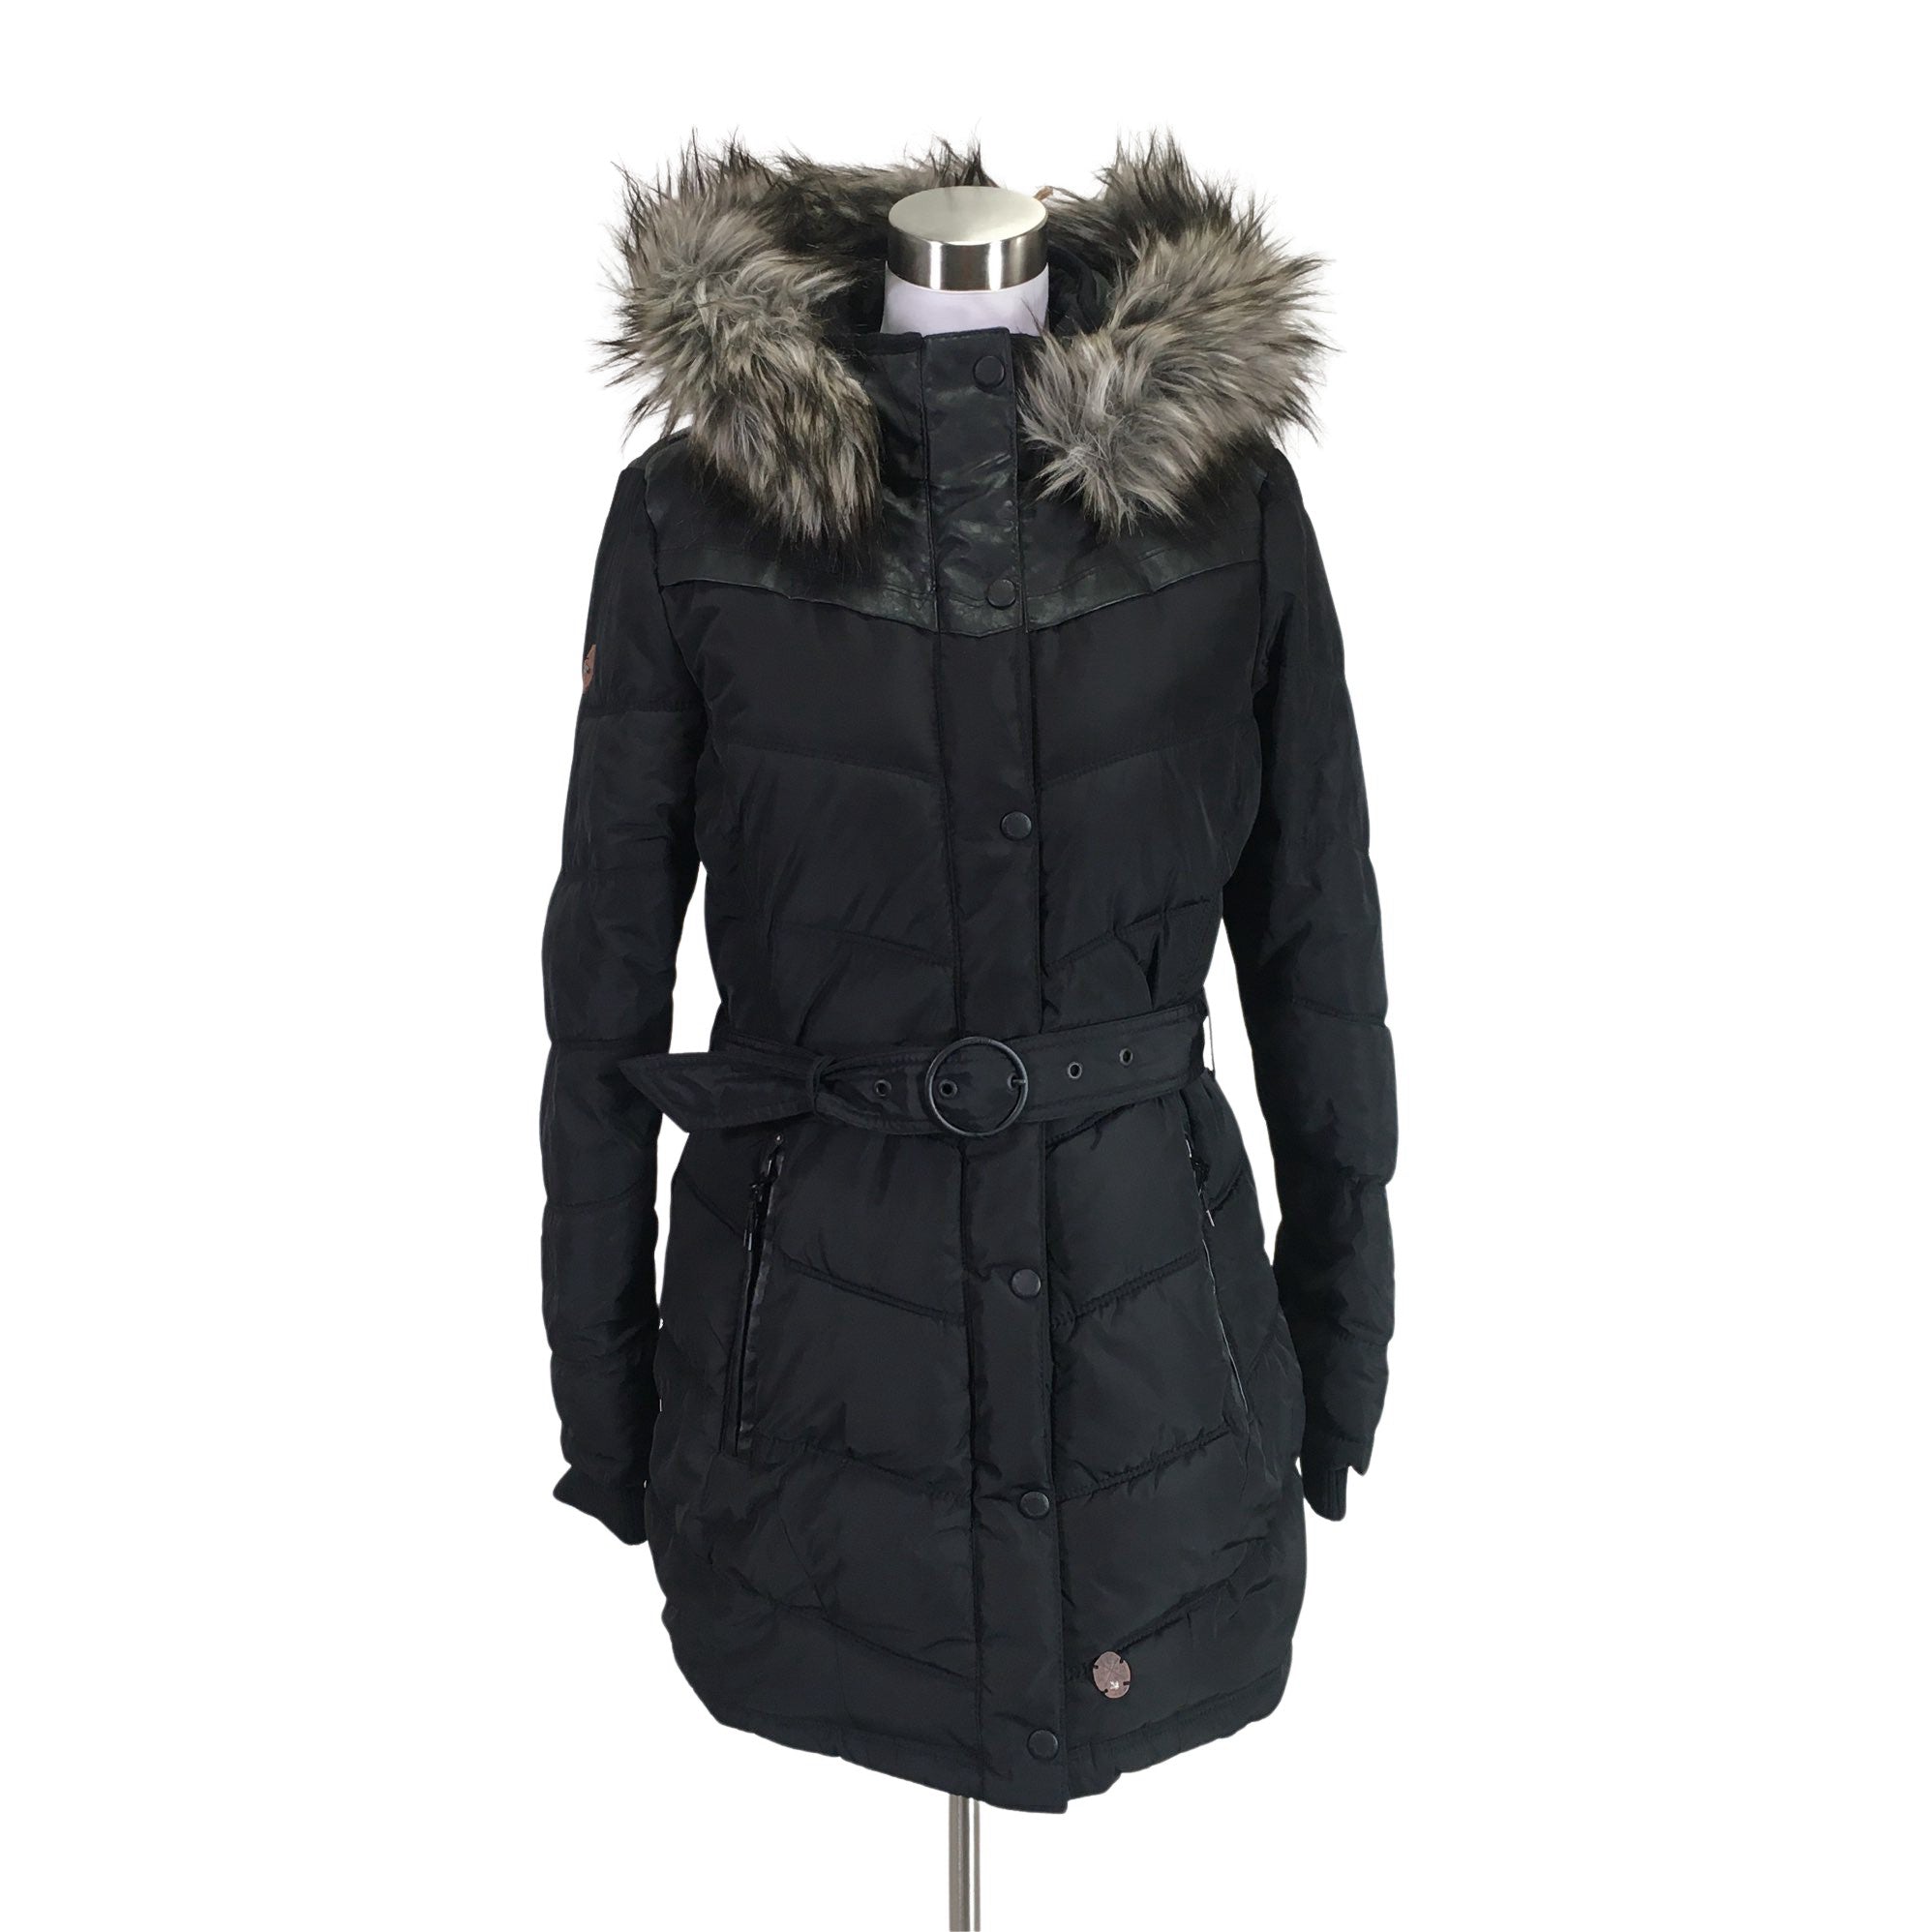 Afstoten overschot stoel Women's Khujo Winter jacket, size 40 (Black) | Emmy